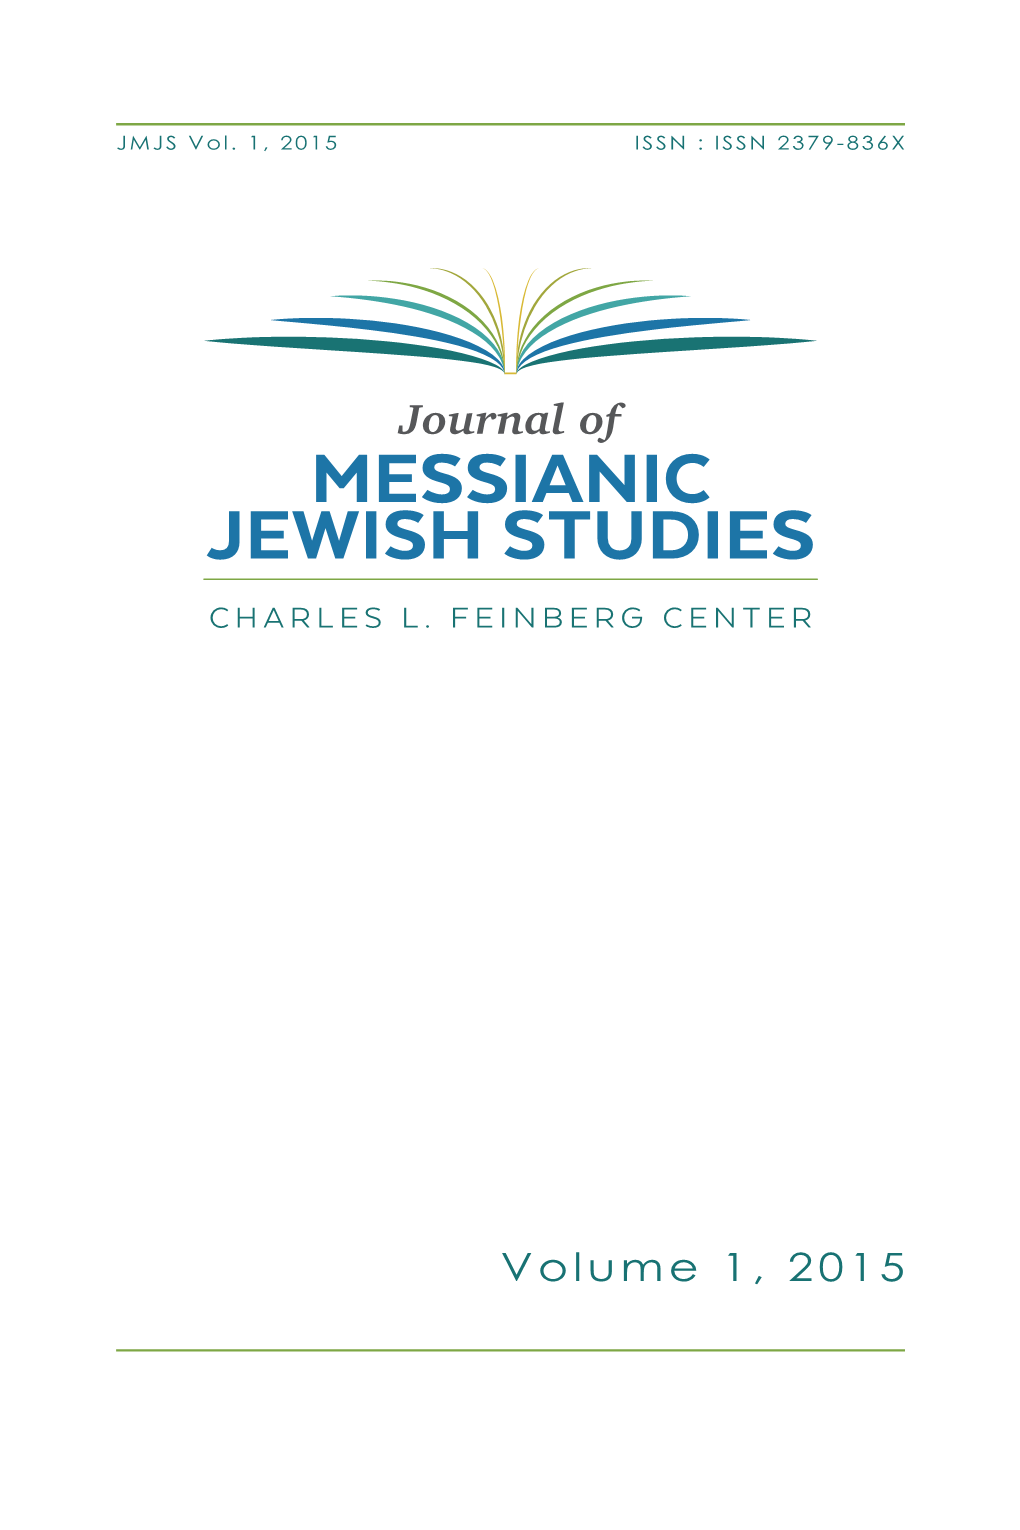 The Journal of Messianic Jewish Studies Vol 1, 2015